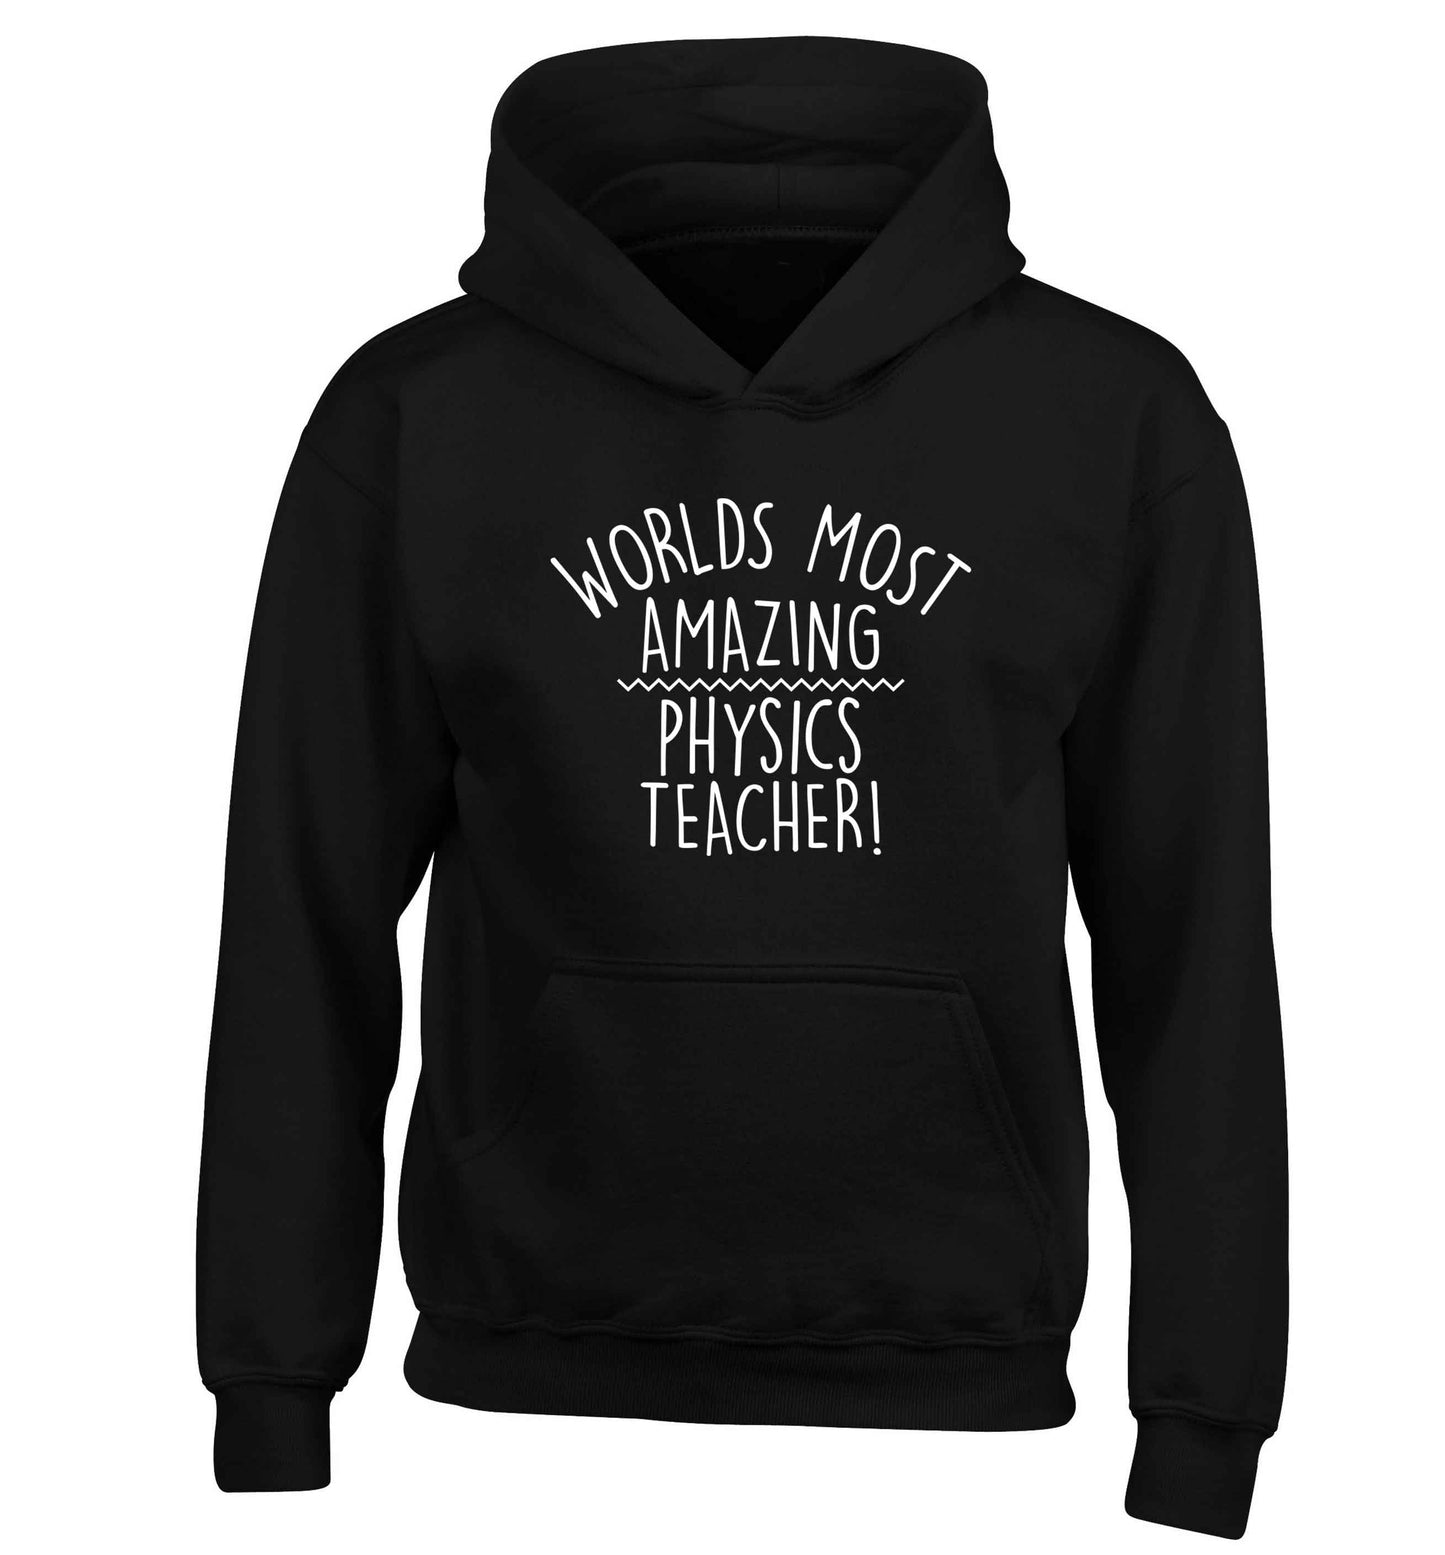 Worlds most amazing physics teacher children's black hoodie 12-13 Years